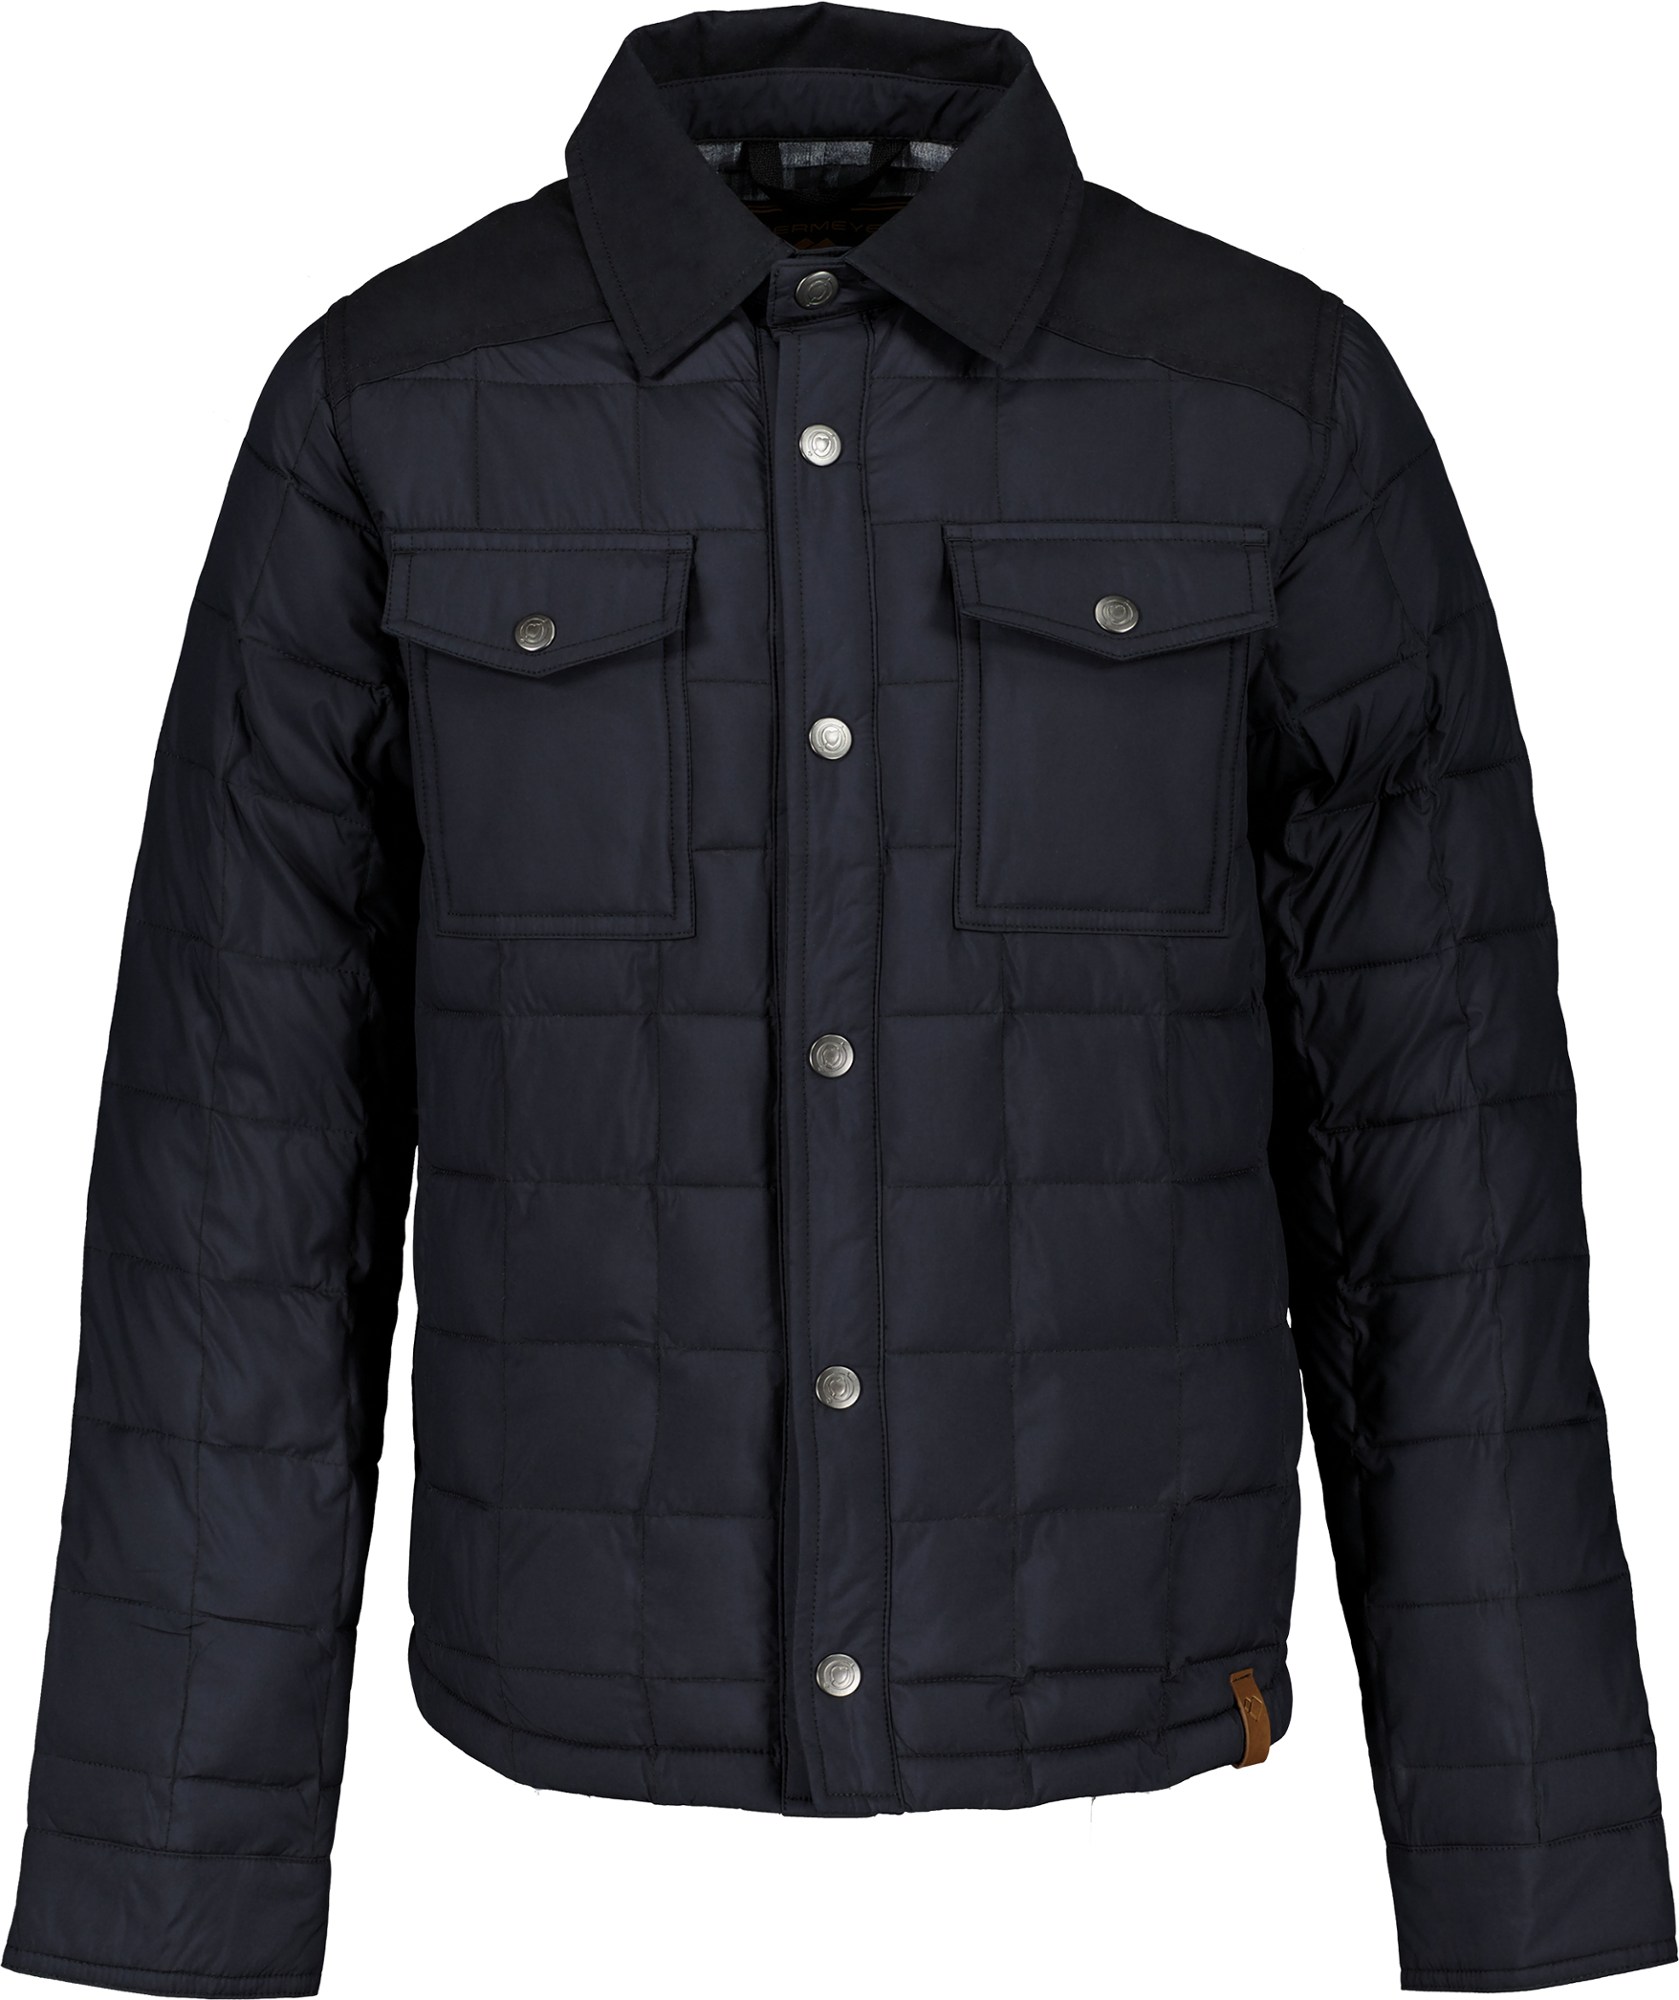 Пуховая куртка-рубашка TB Wilder - для мальчиков Obermeyer, черный пуховая рубашка willa obermeyer цвет harvest